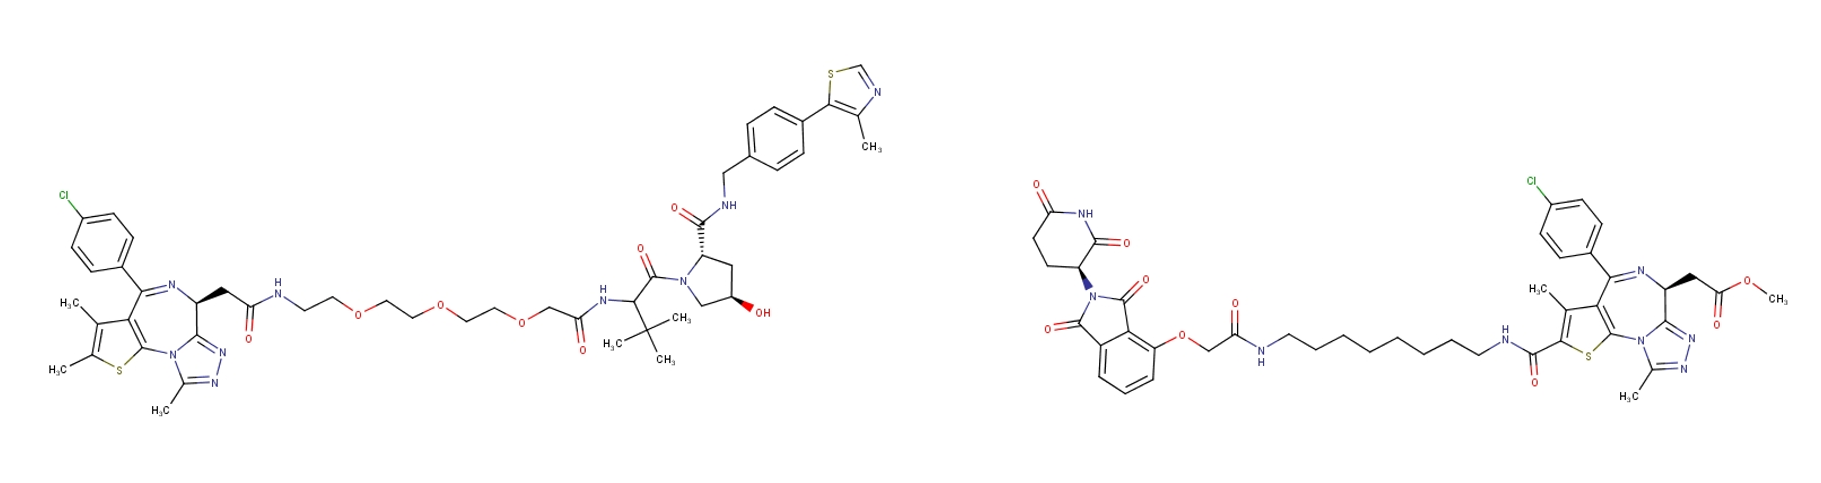 Two BRD4 degrading bifunctional ligands